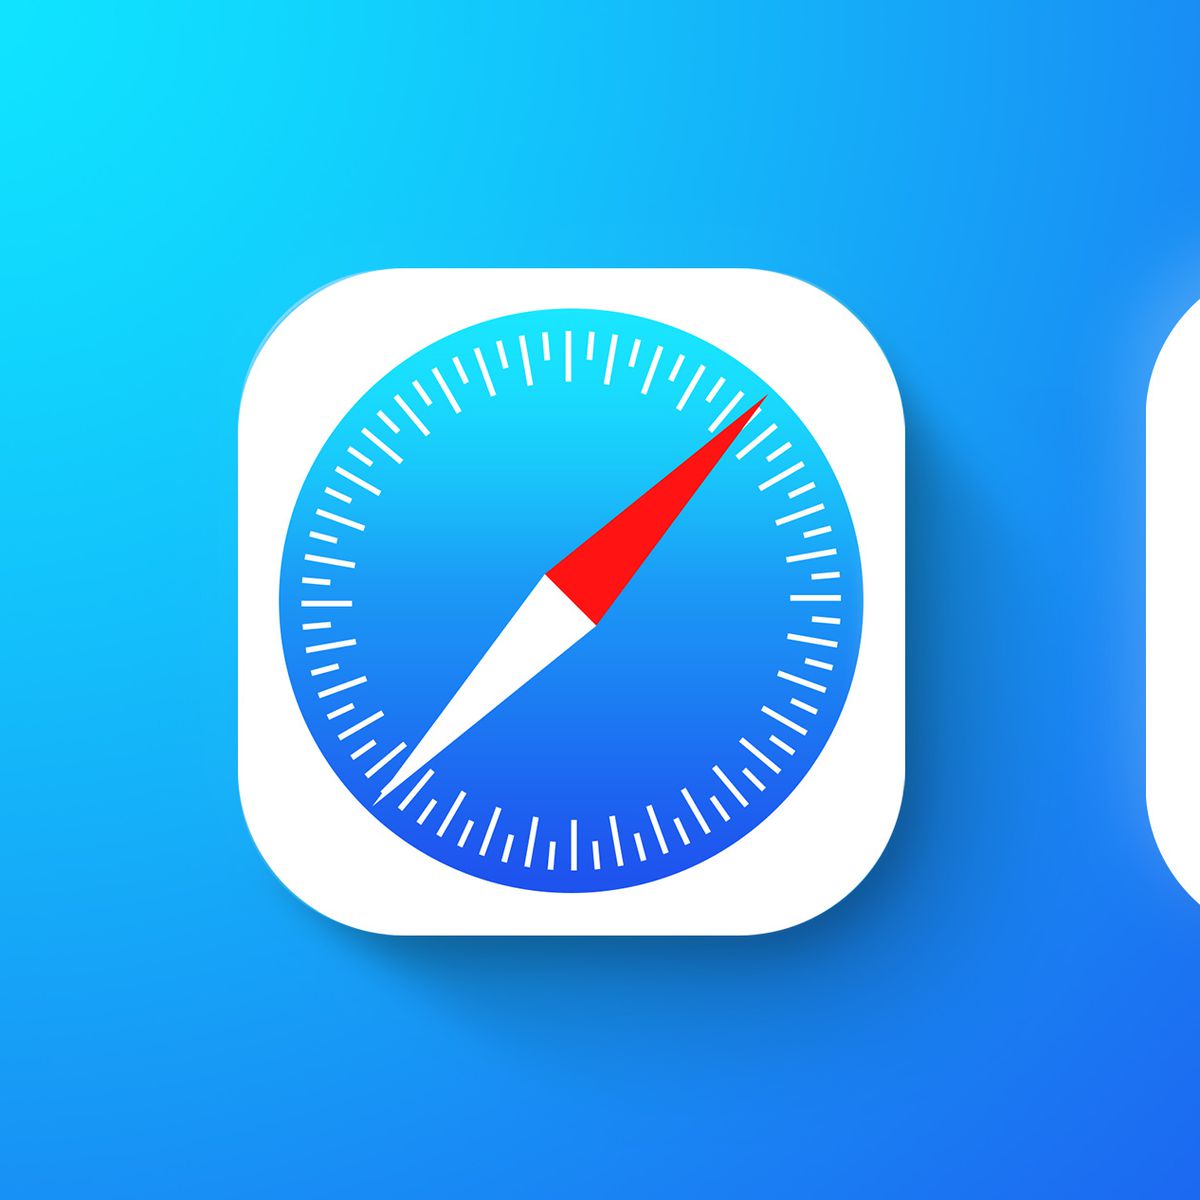 Zoom Safari Extension on iOS 15